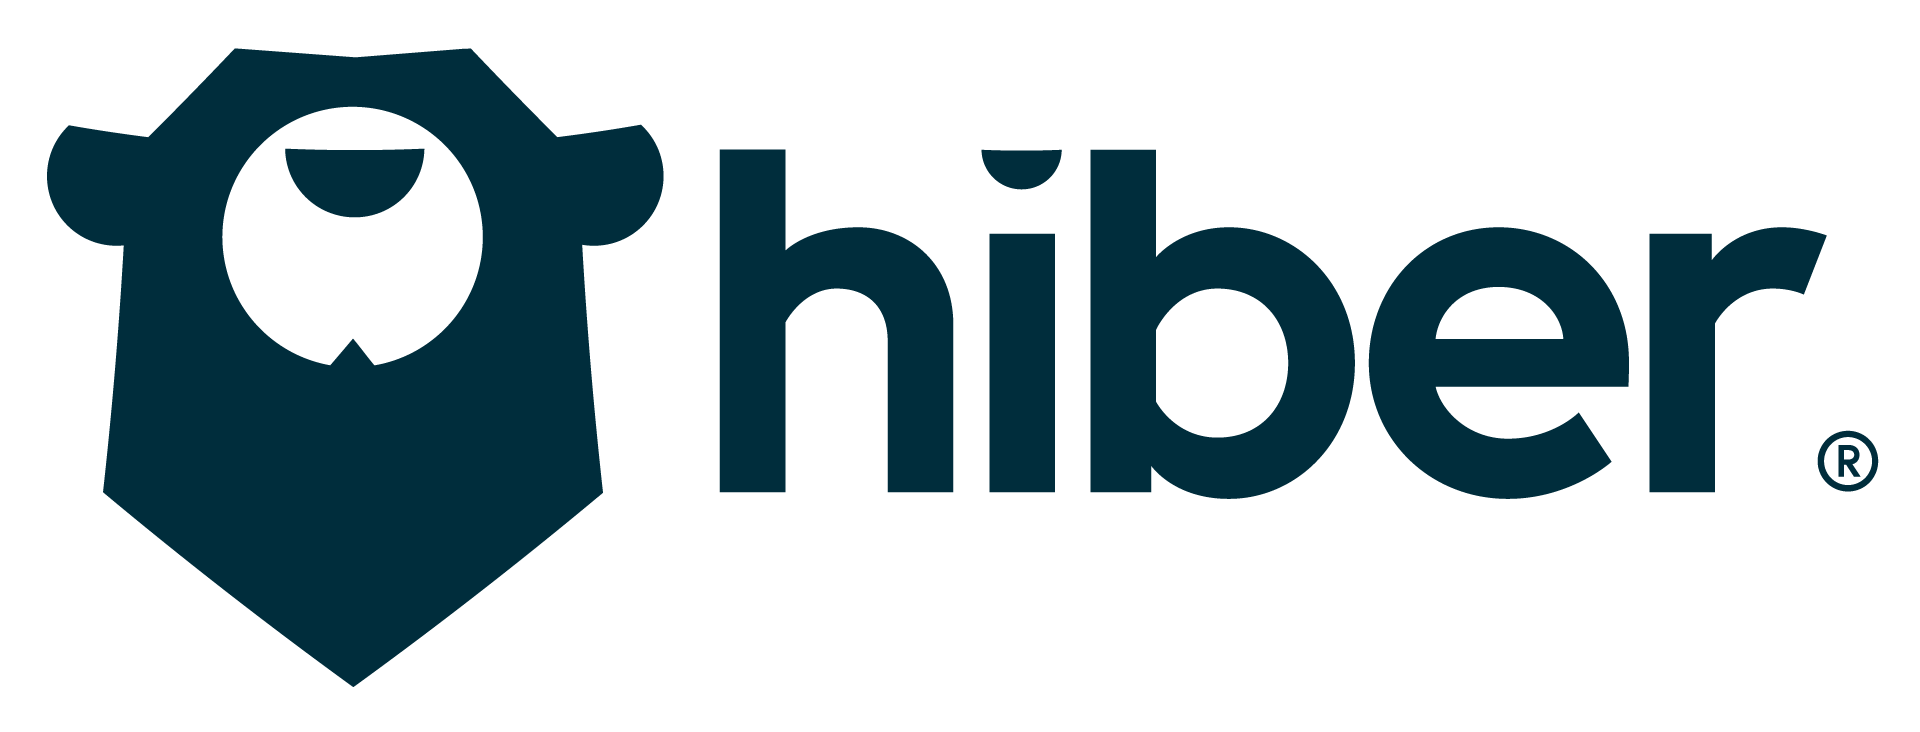 Hiber logo